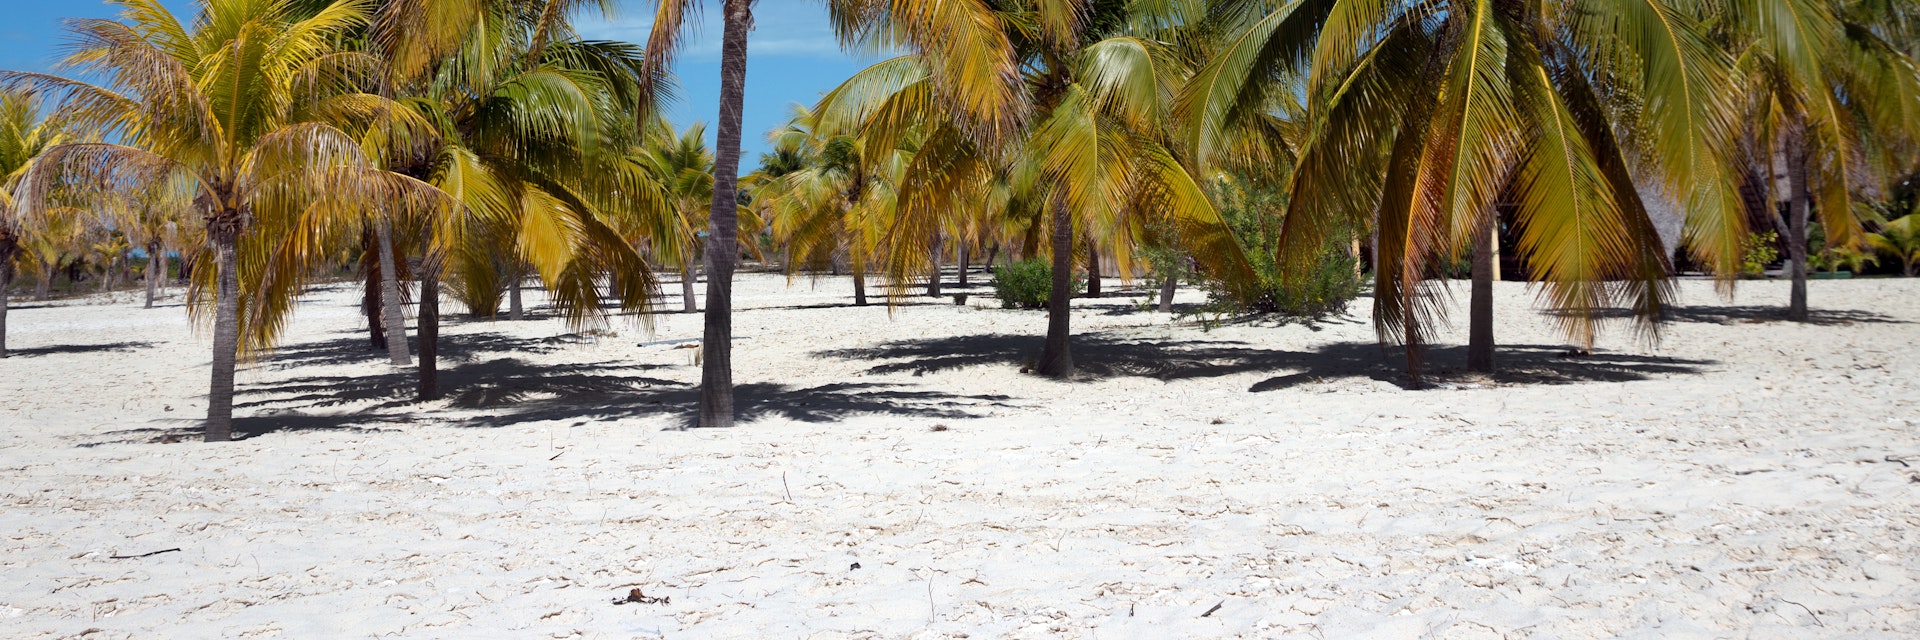 Playa Sirena - Cuban small island of Caribbean Sea